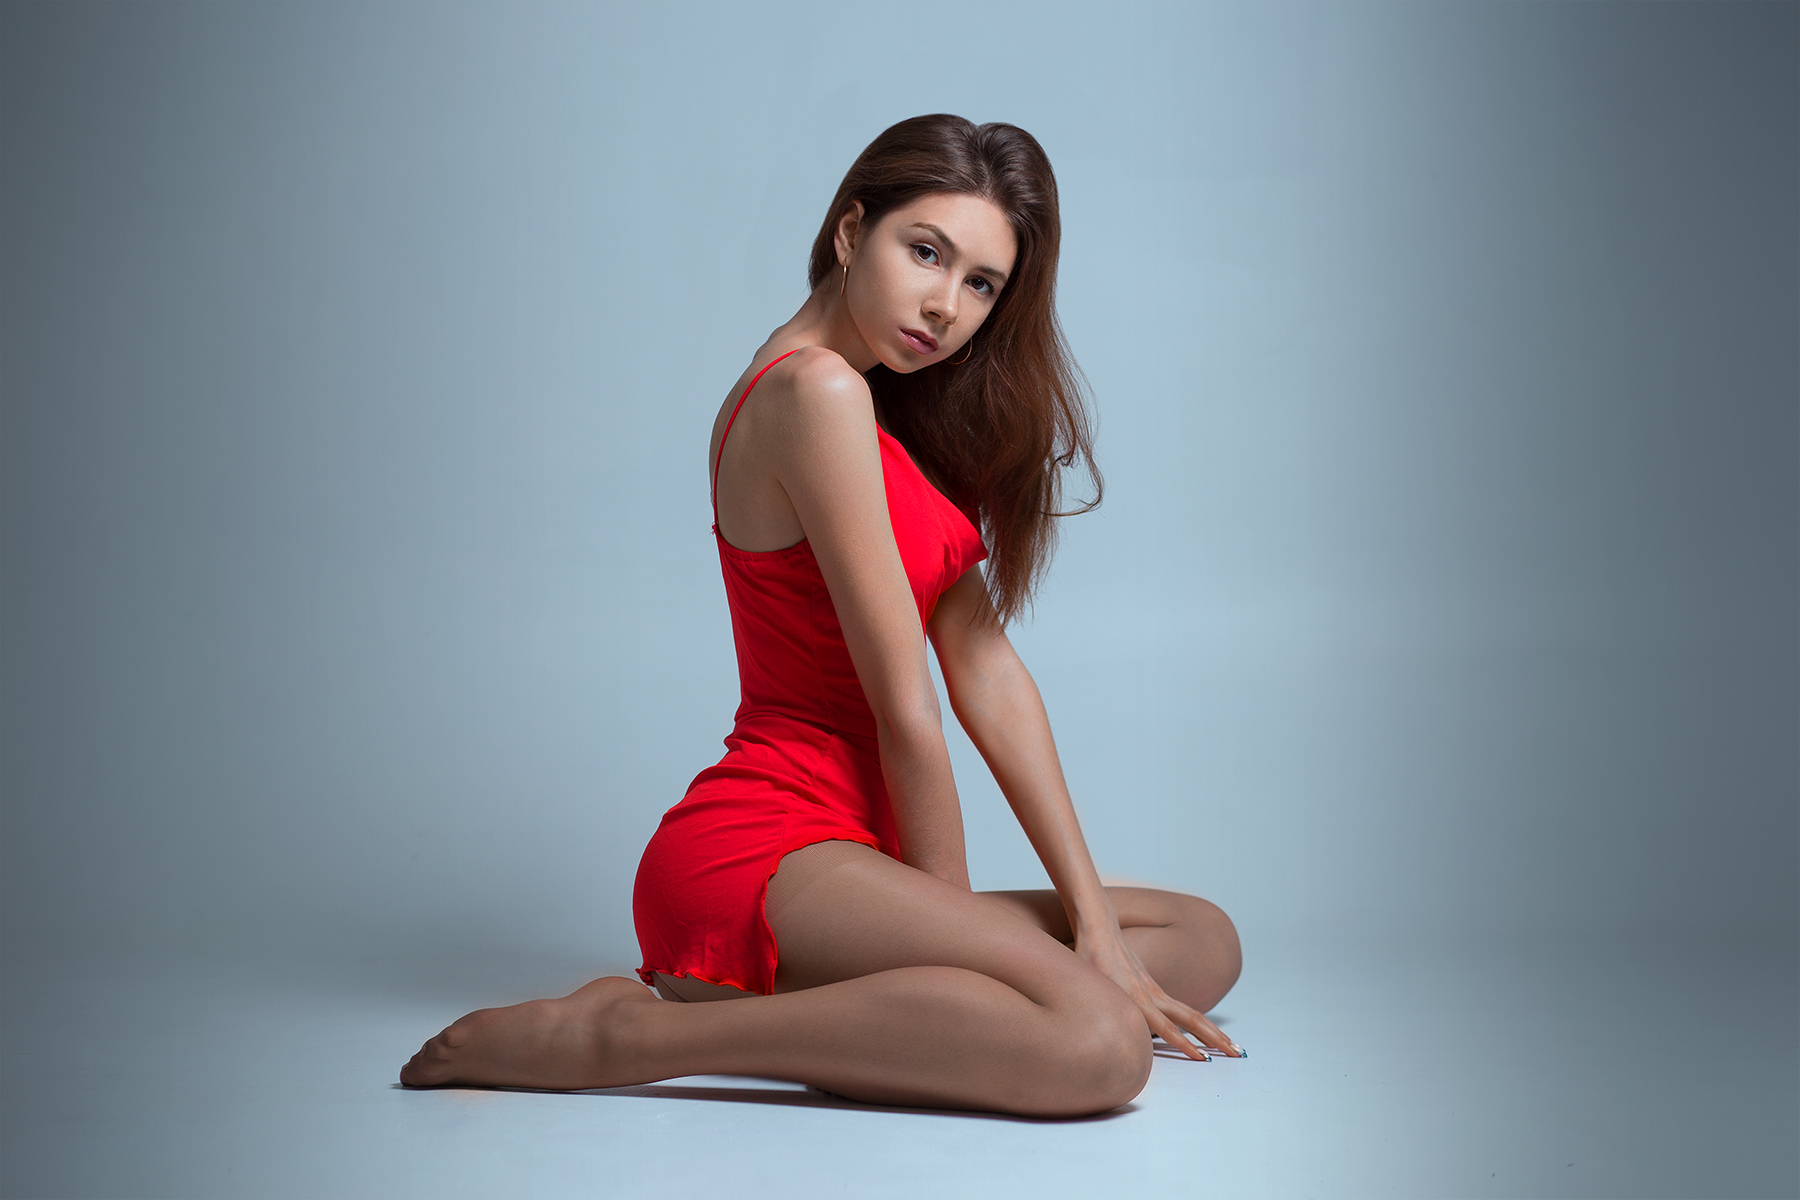 Aleksey Lozgachev Women Brunette Long Hair Looking At Viewer Dress Red Clothing On The Floor Studio  1800x1200